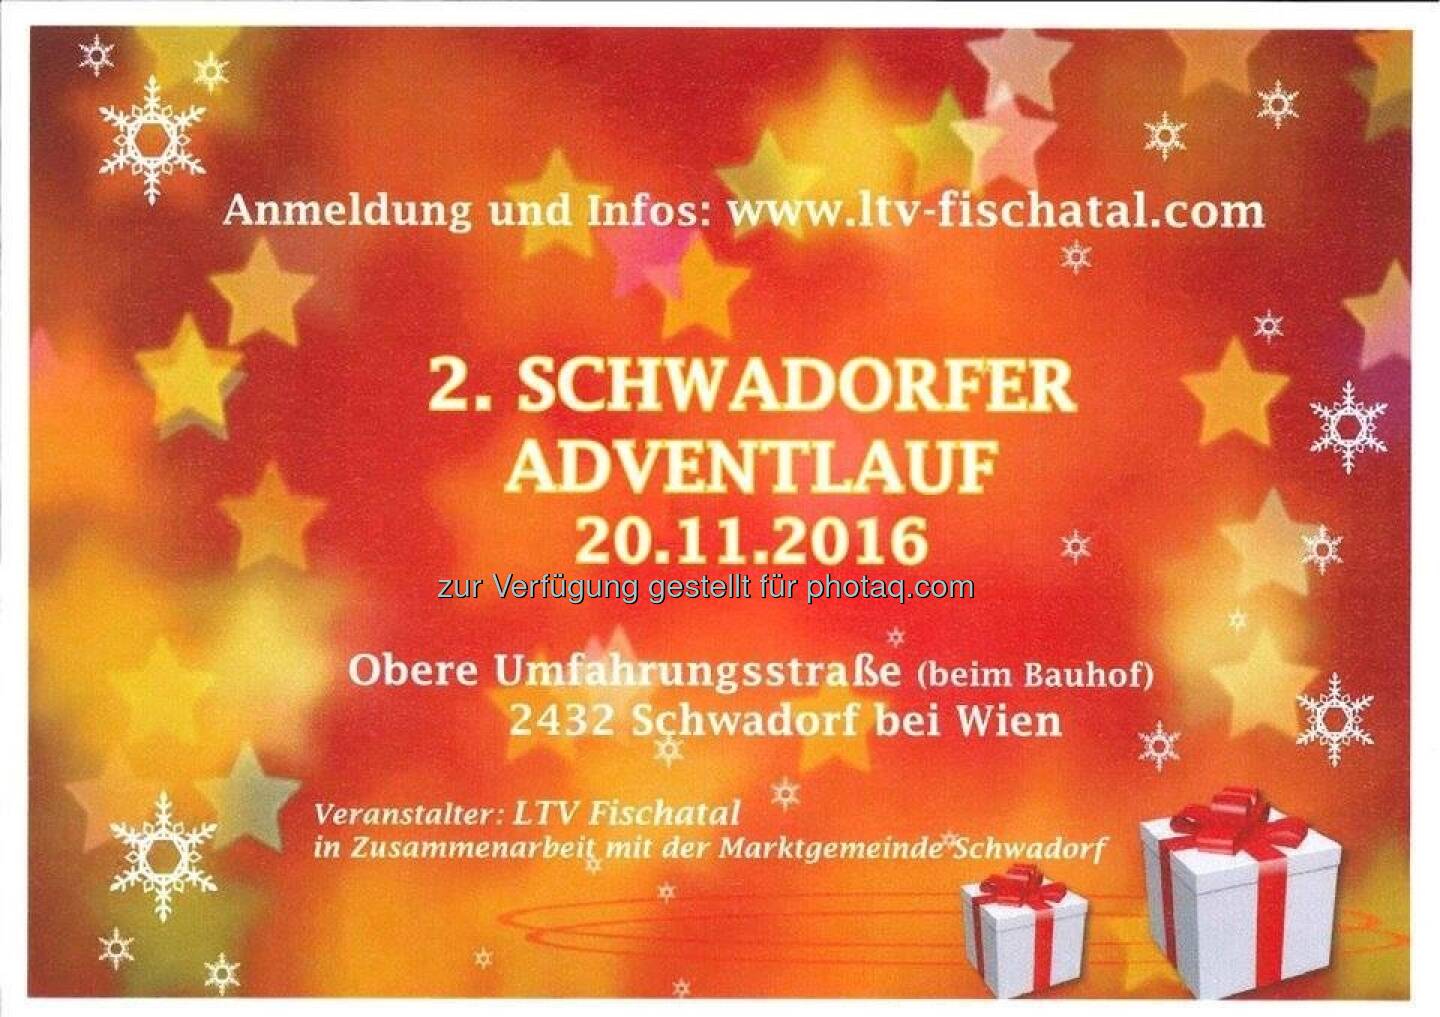 2. Schwadorfer Adventlauf